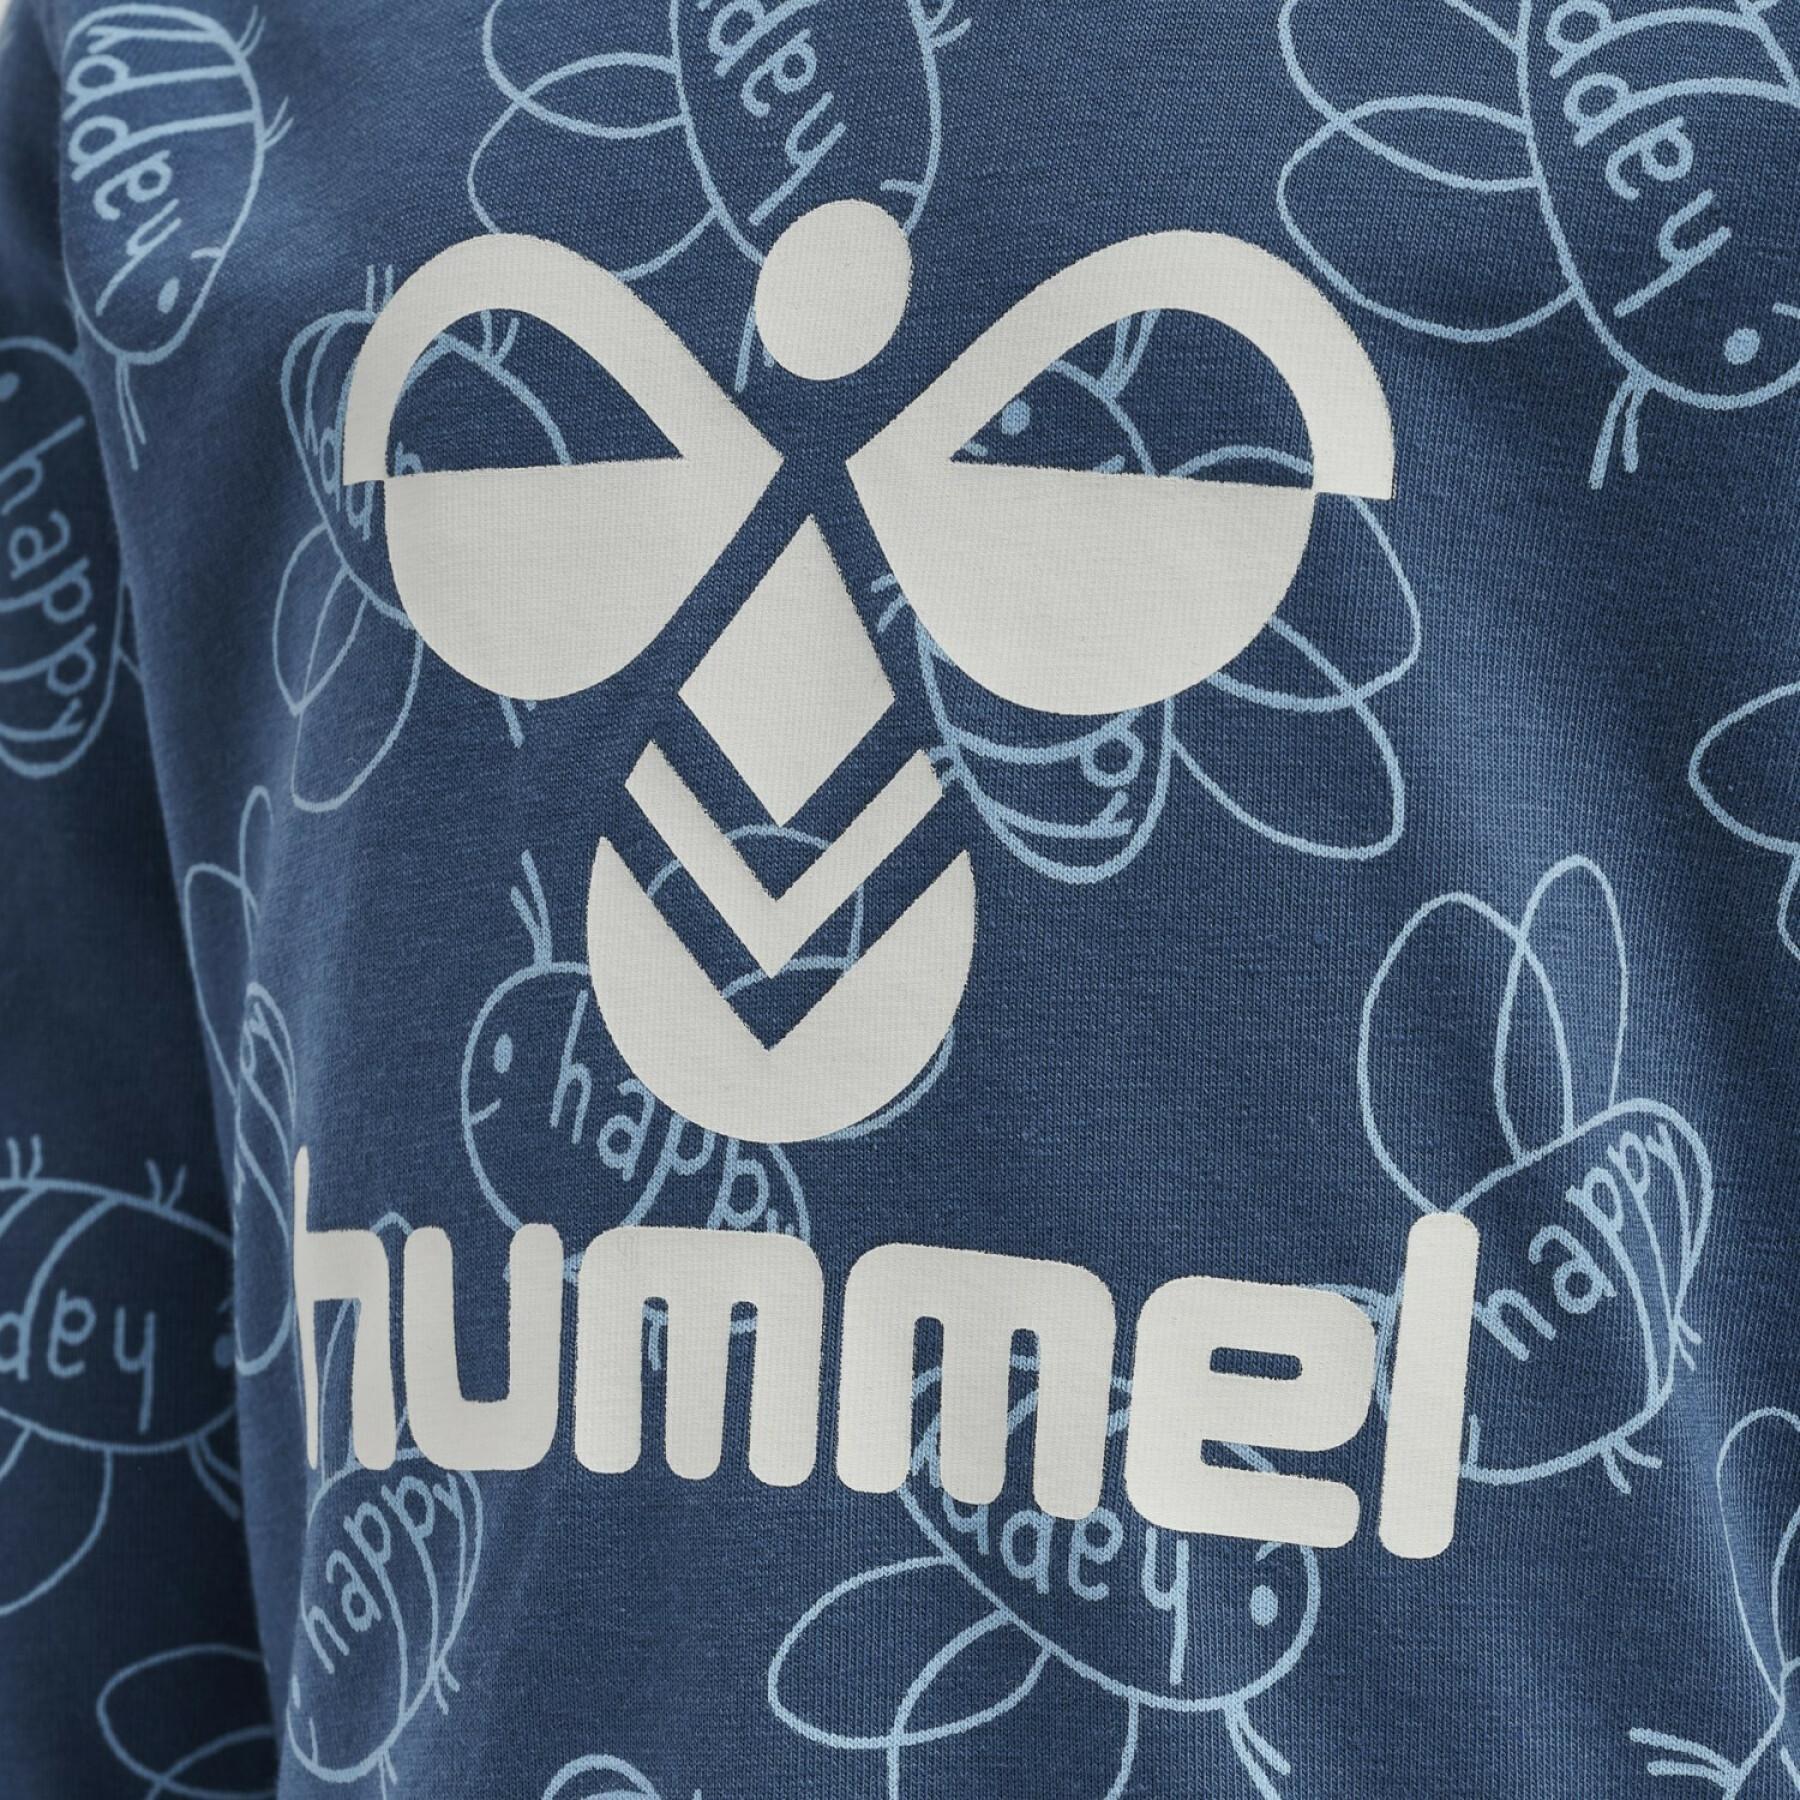 Baby-T-shirt lange mouwen Hummel hmlCollin